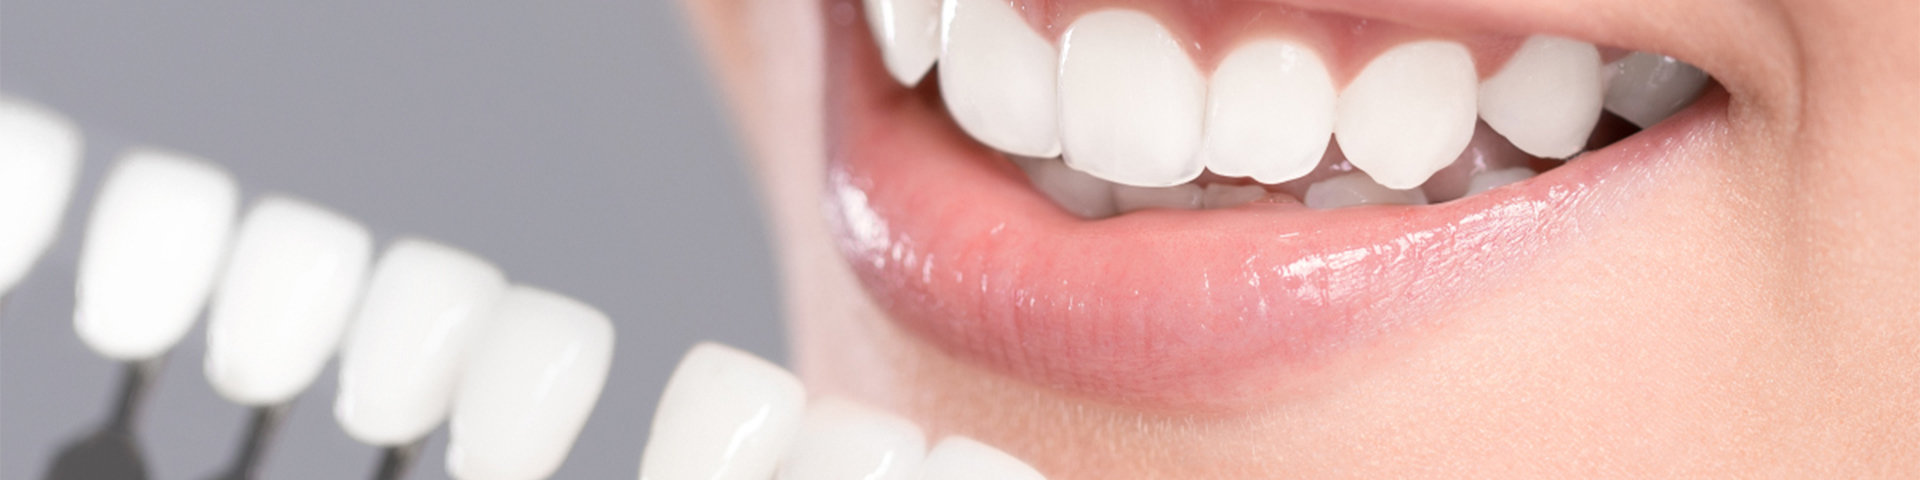 Teeth Whitening Accessories